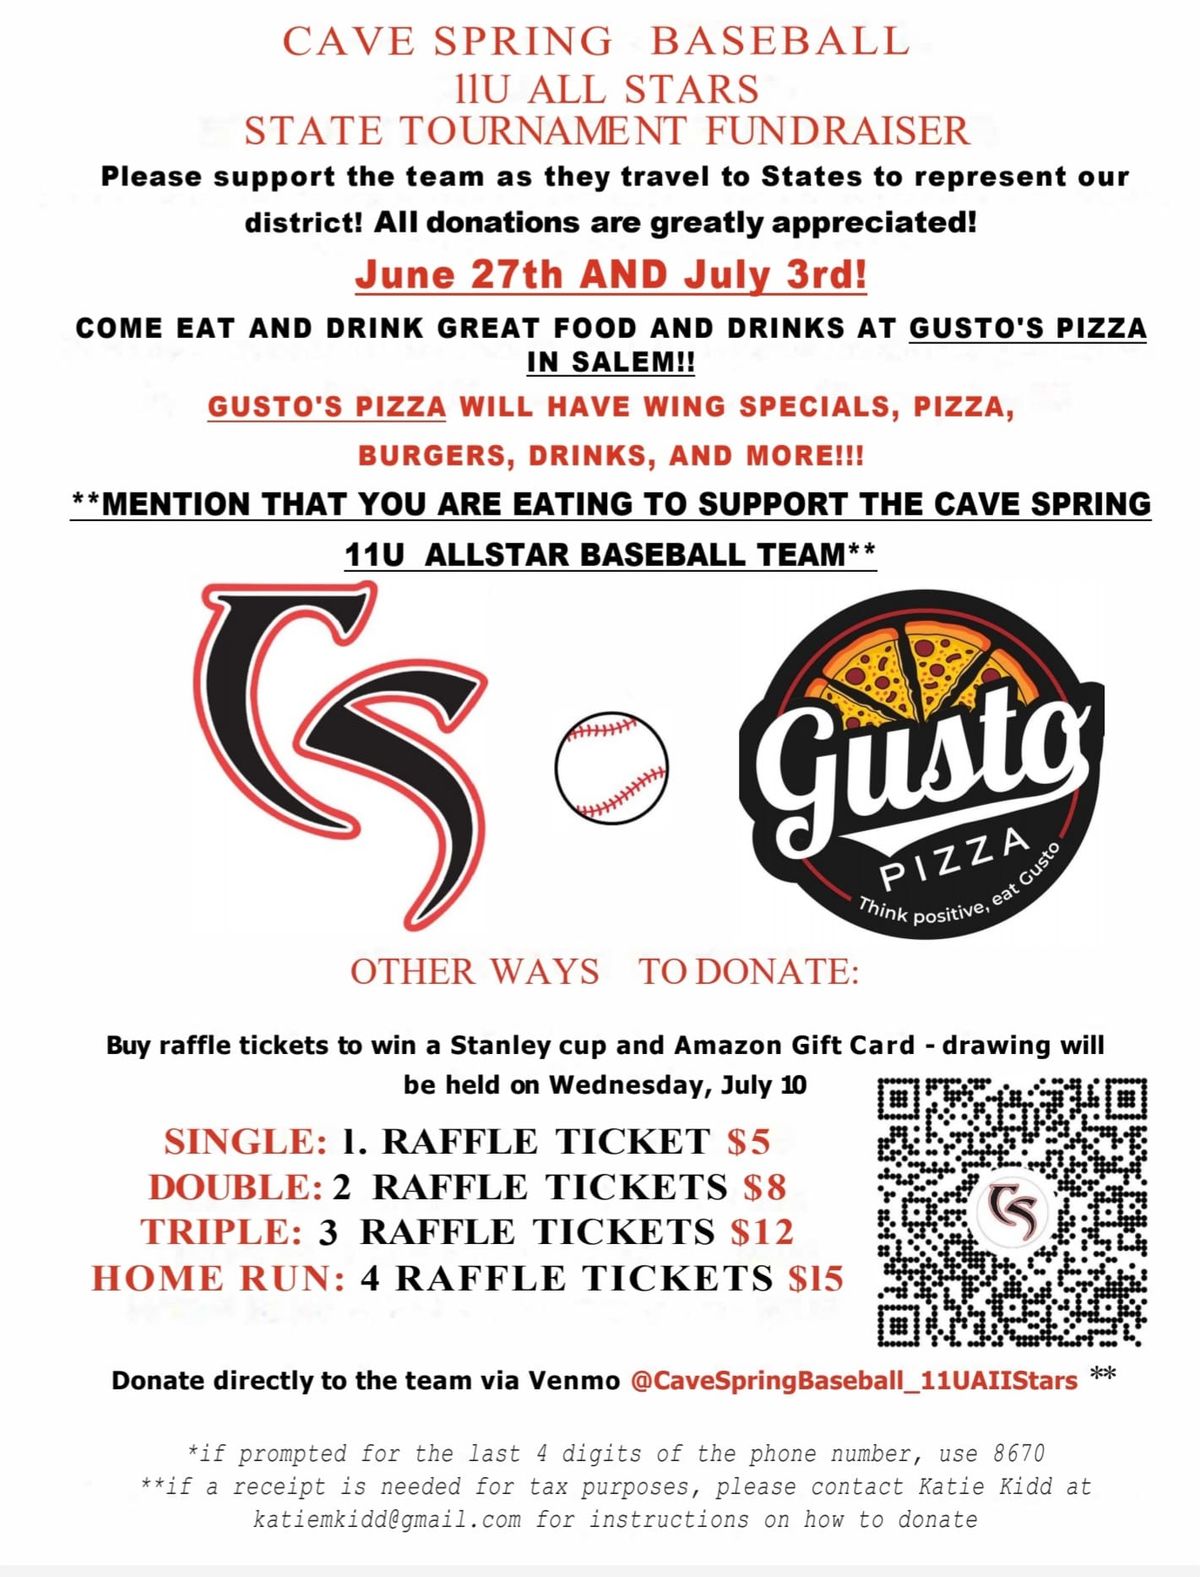 Gusto's pizza night for the Cave Spring 11u Allstar baseball team